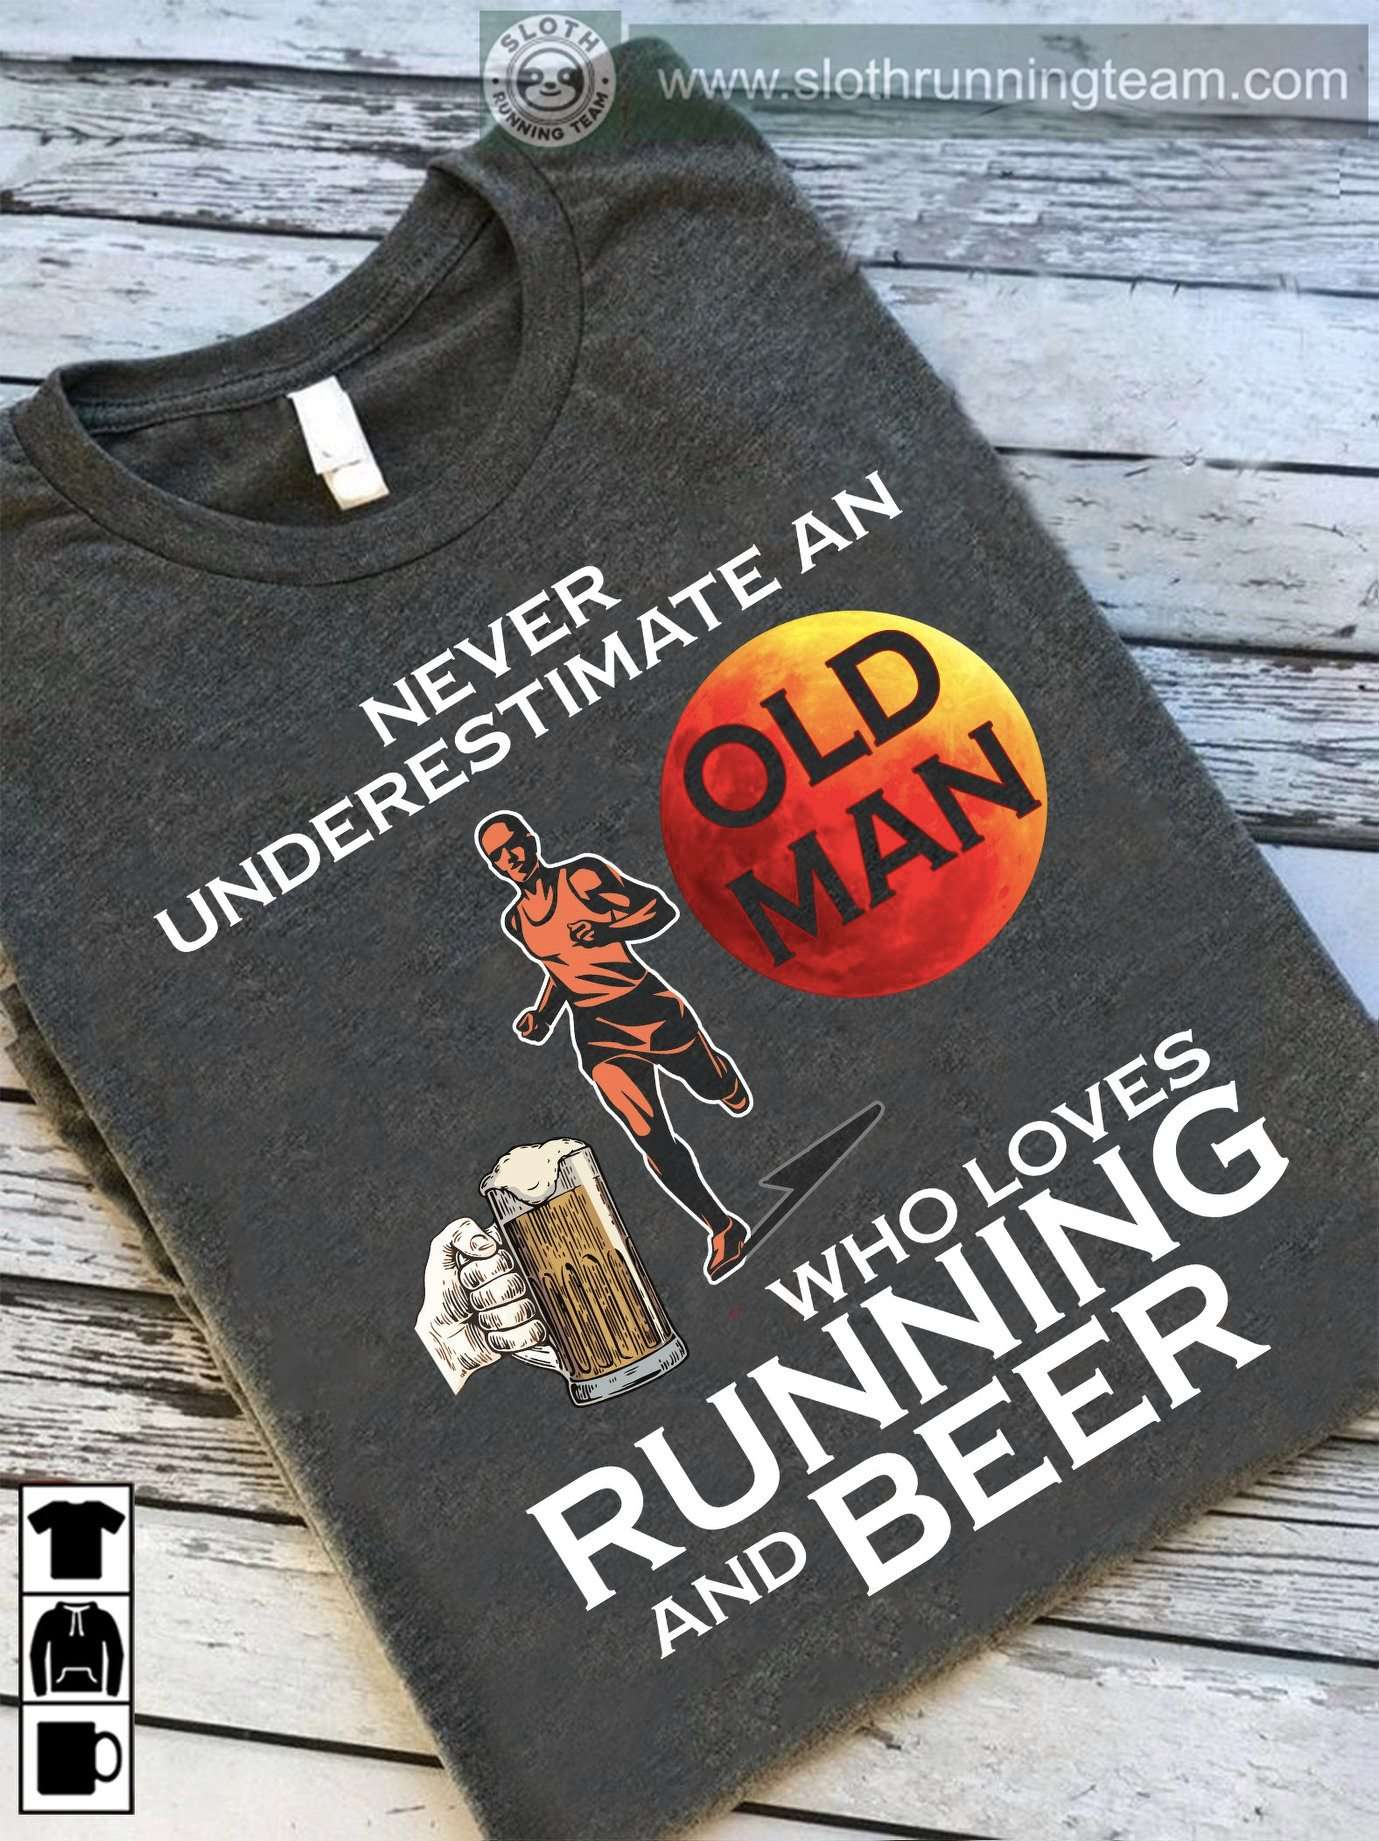 Never underestimate an old man who loves running and beer - Beer for runner, gift for running sport